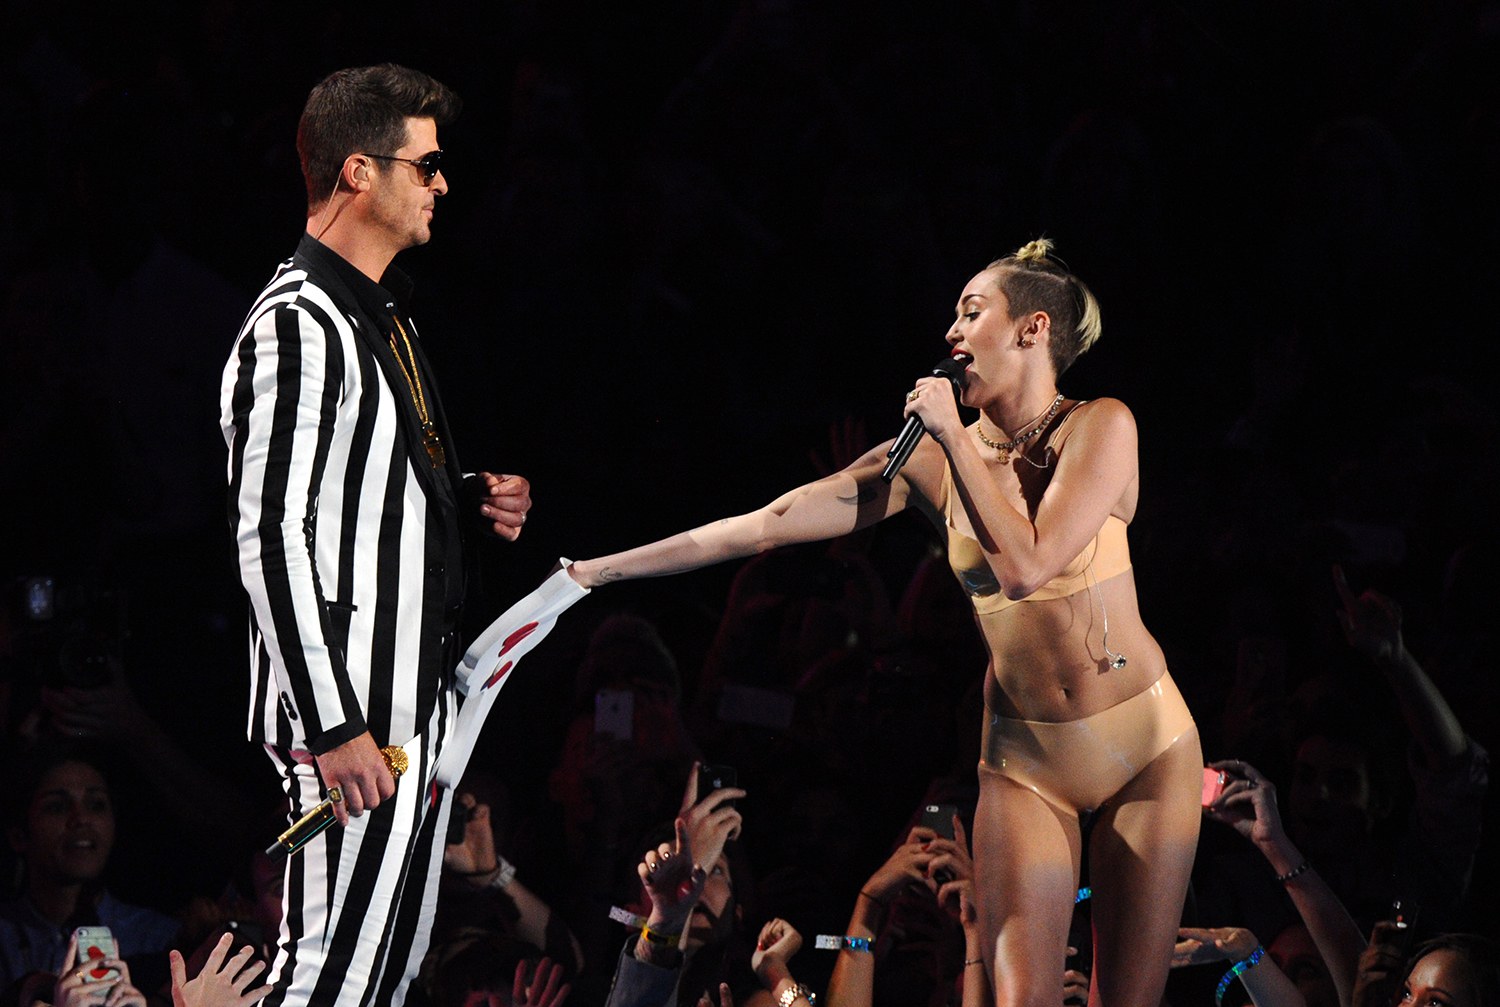 Miley Sex Video - Miley Cyrus gets embarrassingly raunchy at the VMAs